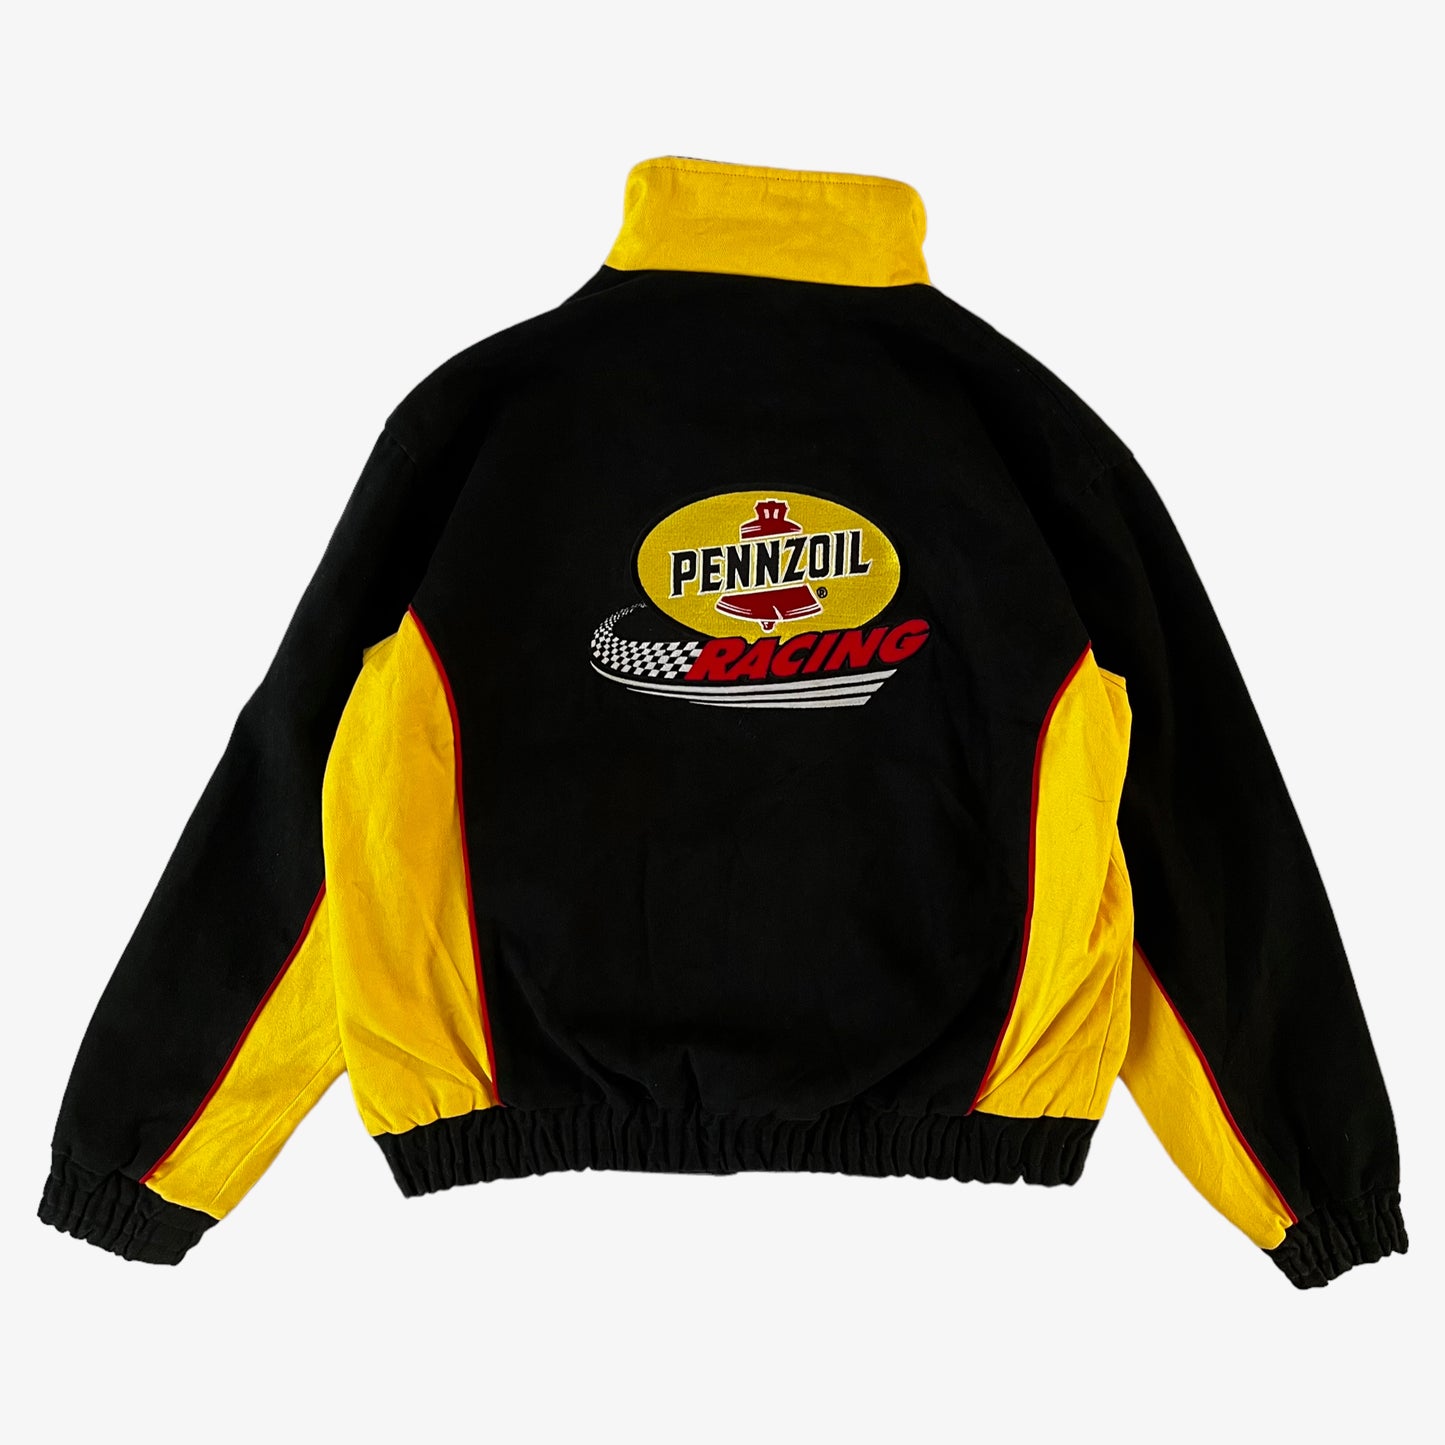 Vintage 90s Pennzoil Racing Team Nascar Jacket Back - Casspios Dream